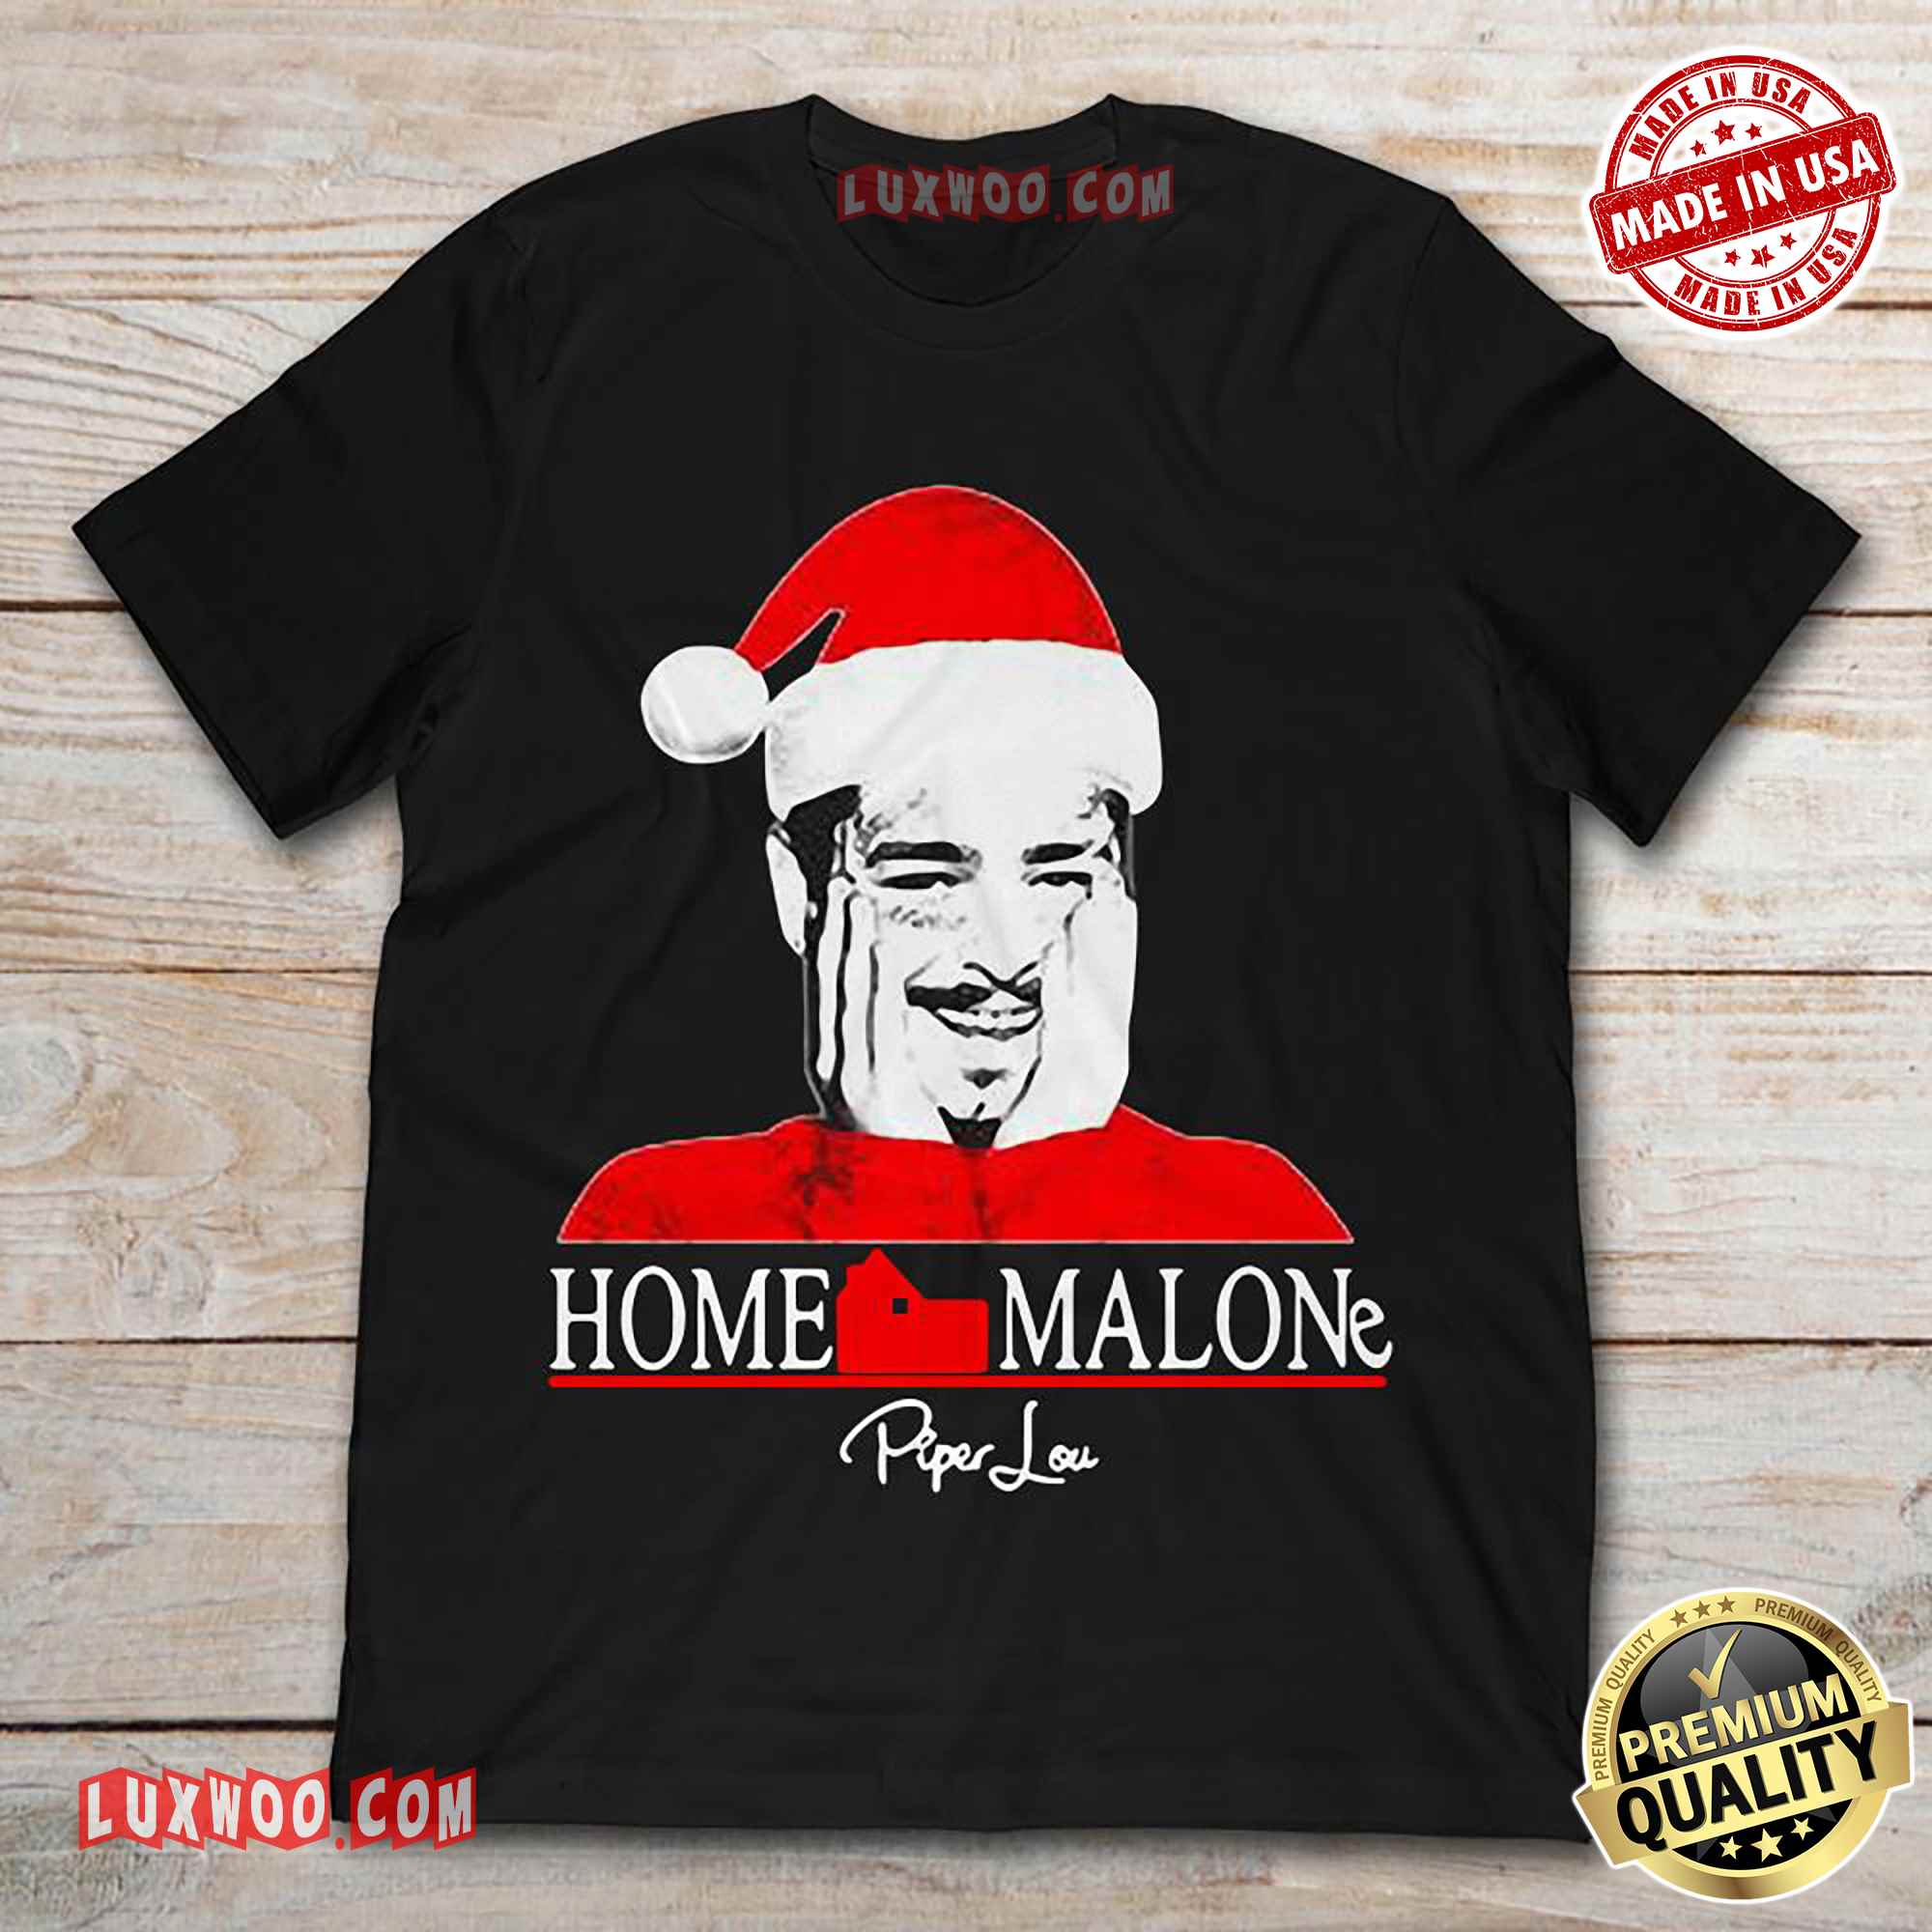 Home Malone Piper Lou Home Alone Post Malone Christmas Tee Shirt